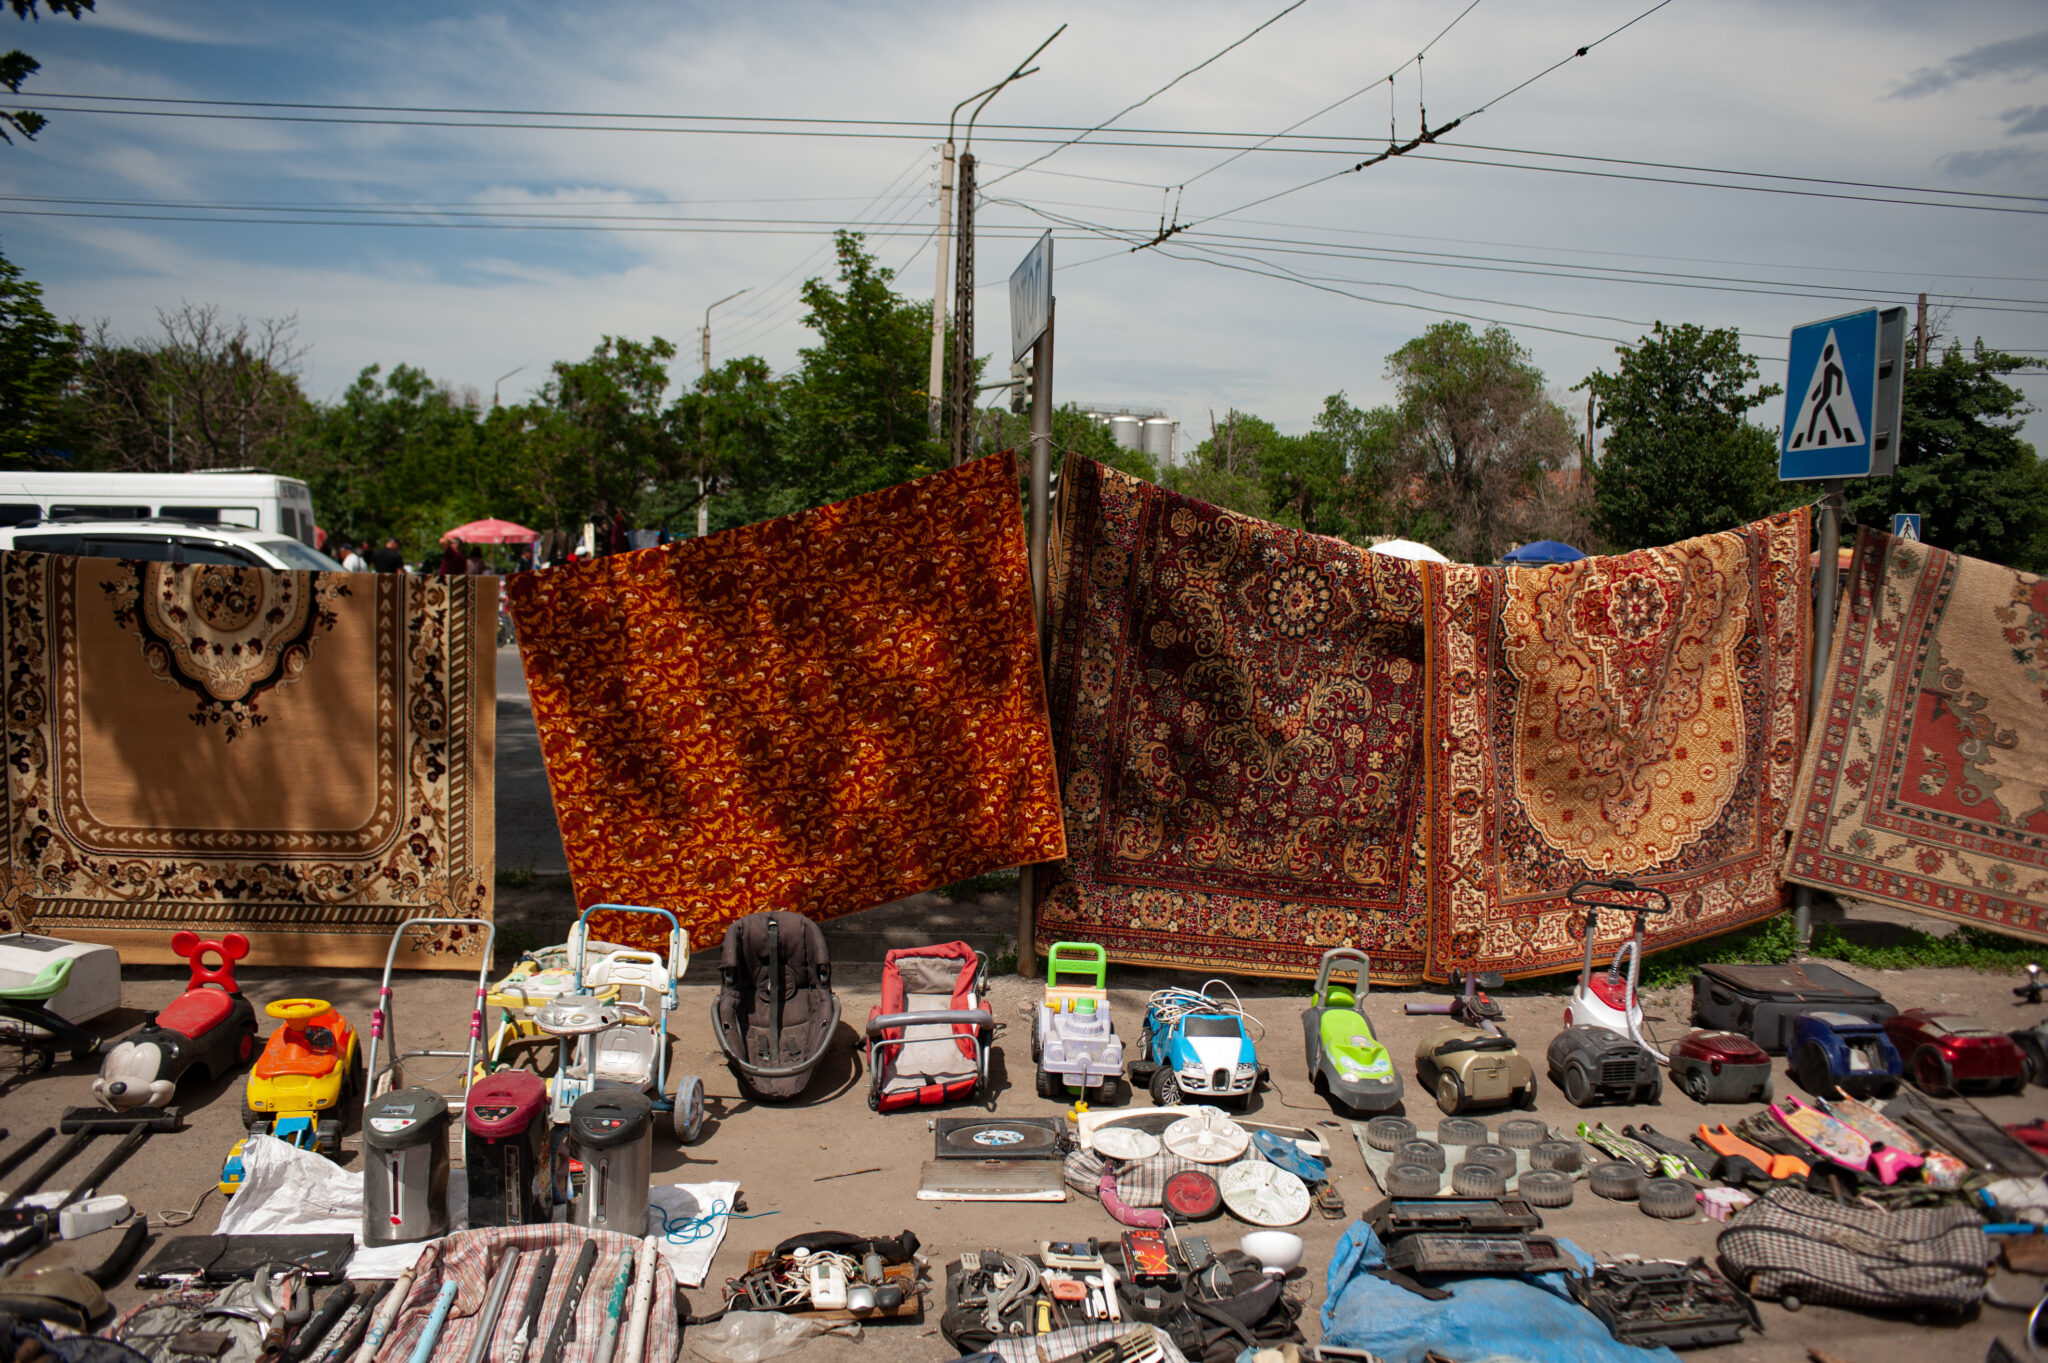 Барахолка около Ошского рынка, Бишкек. Фото Константин Саломатин для Spektr.press